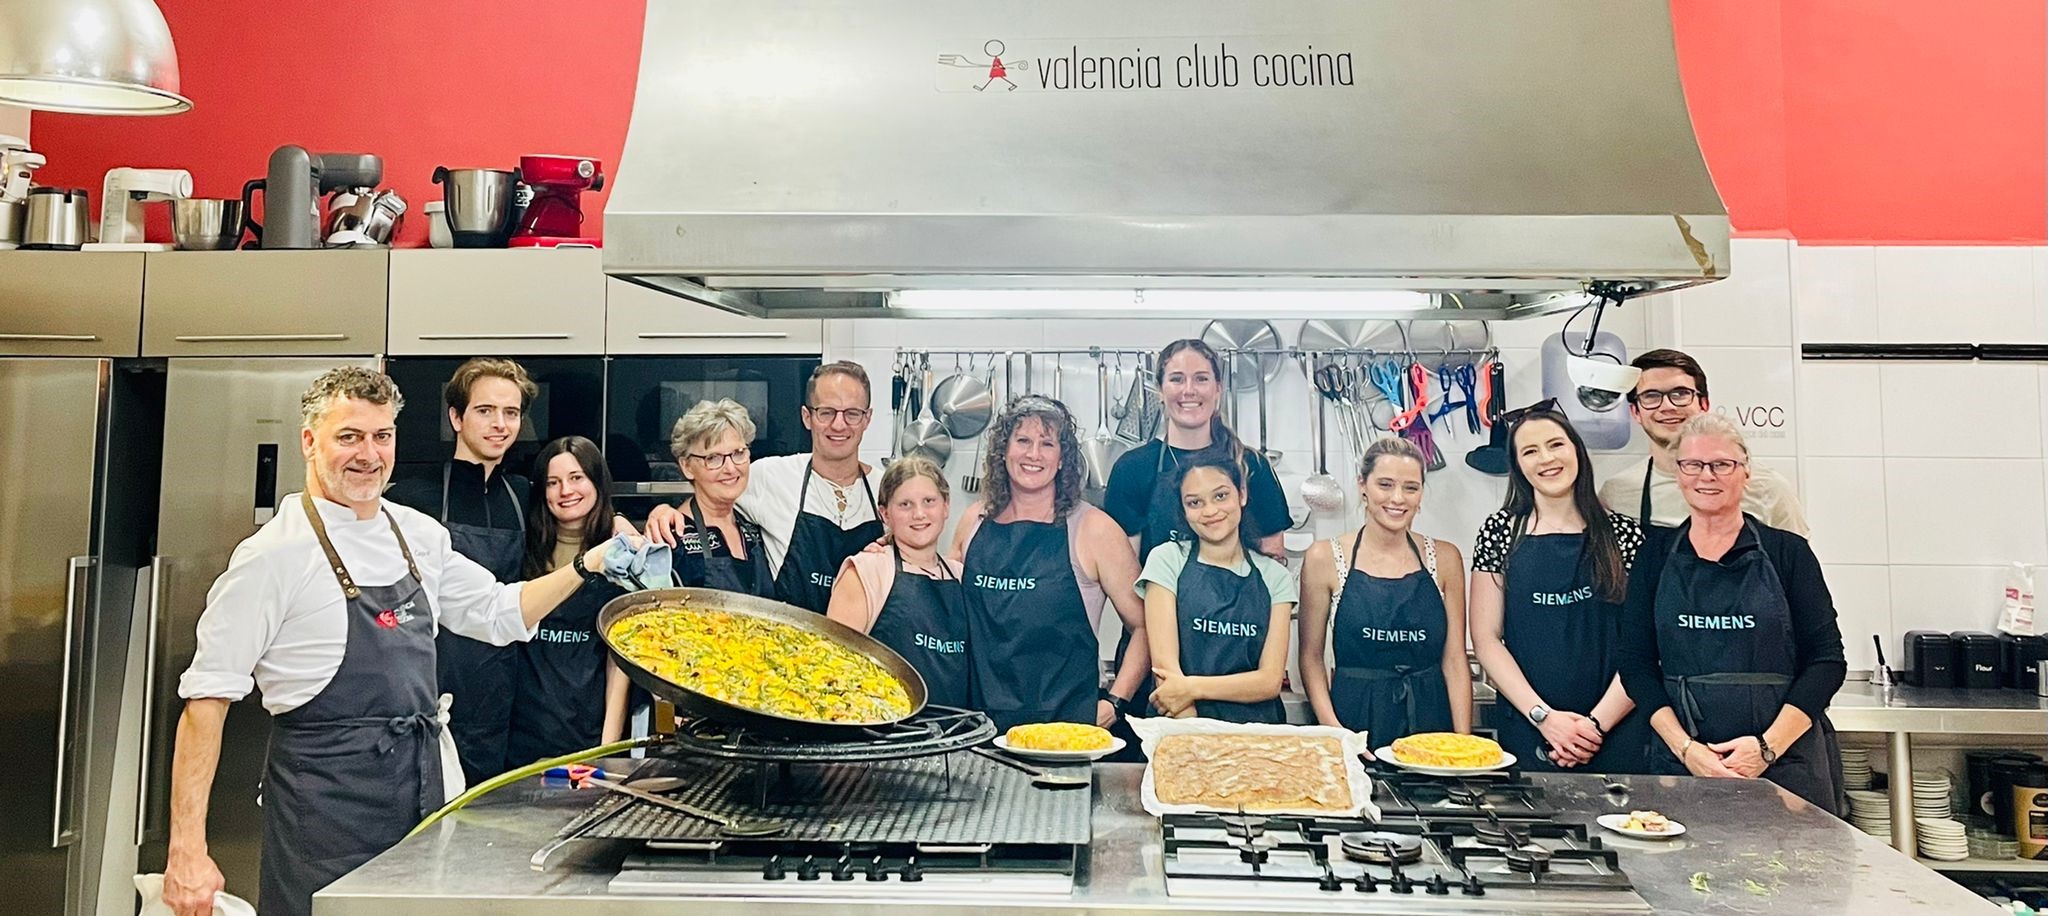 Paella Experience con Valencia Club Cocina 